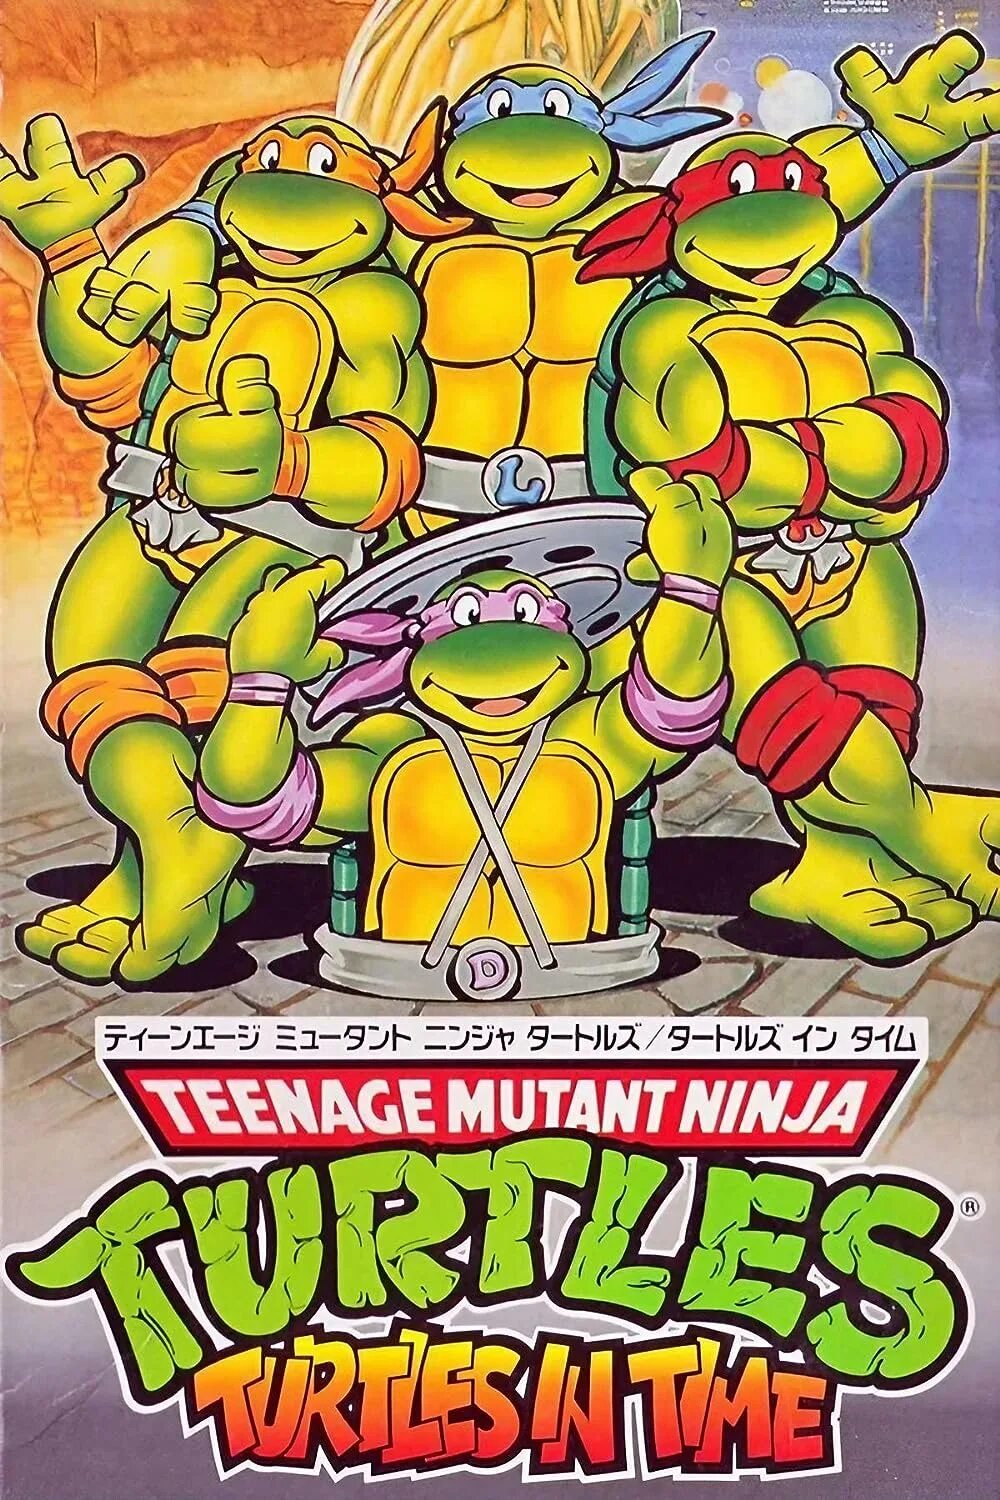 Teenage Mutant Ninja Turtles 4 Turtles in time. Обложка ниндзя Туртлес супер Нинтендо. Teenage Mutant Ninja Turtles IV Turtles in time Snes. Обложка для teenage Mutant Ninja Turtles IV - Turtles in time Нинтендо.